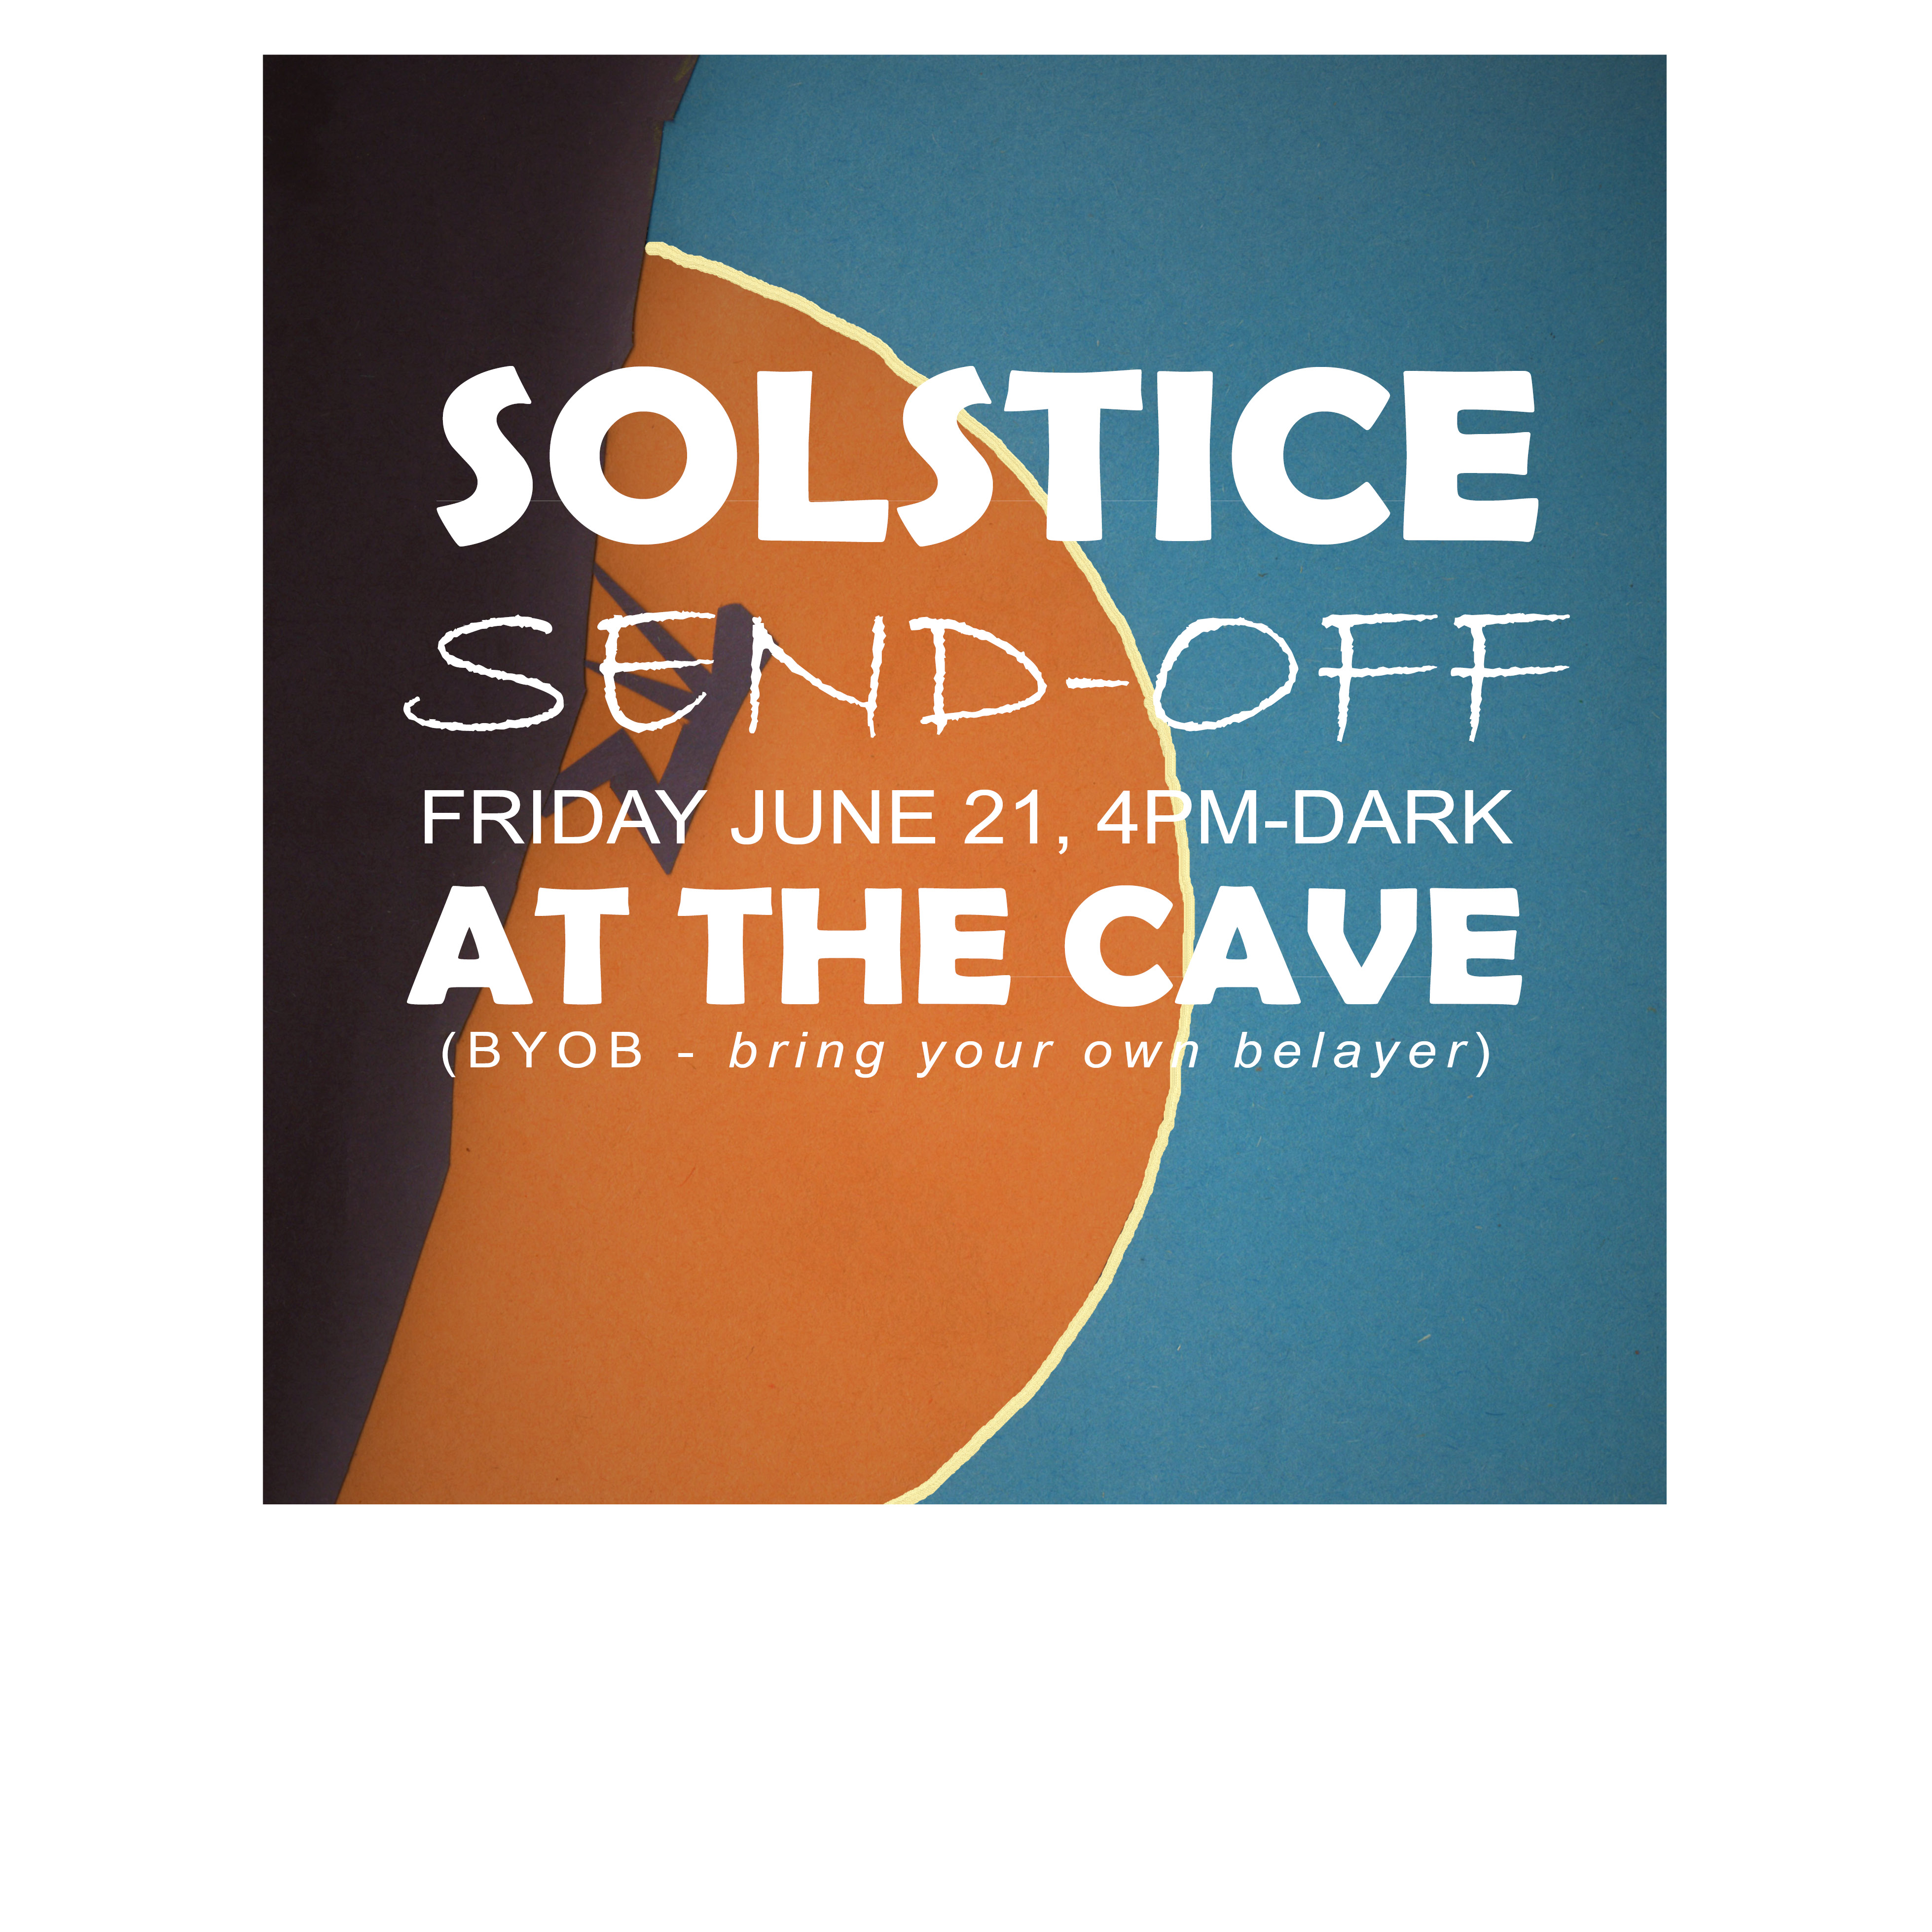 Solstice Send-Off